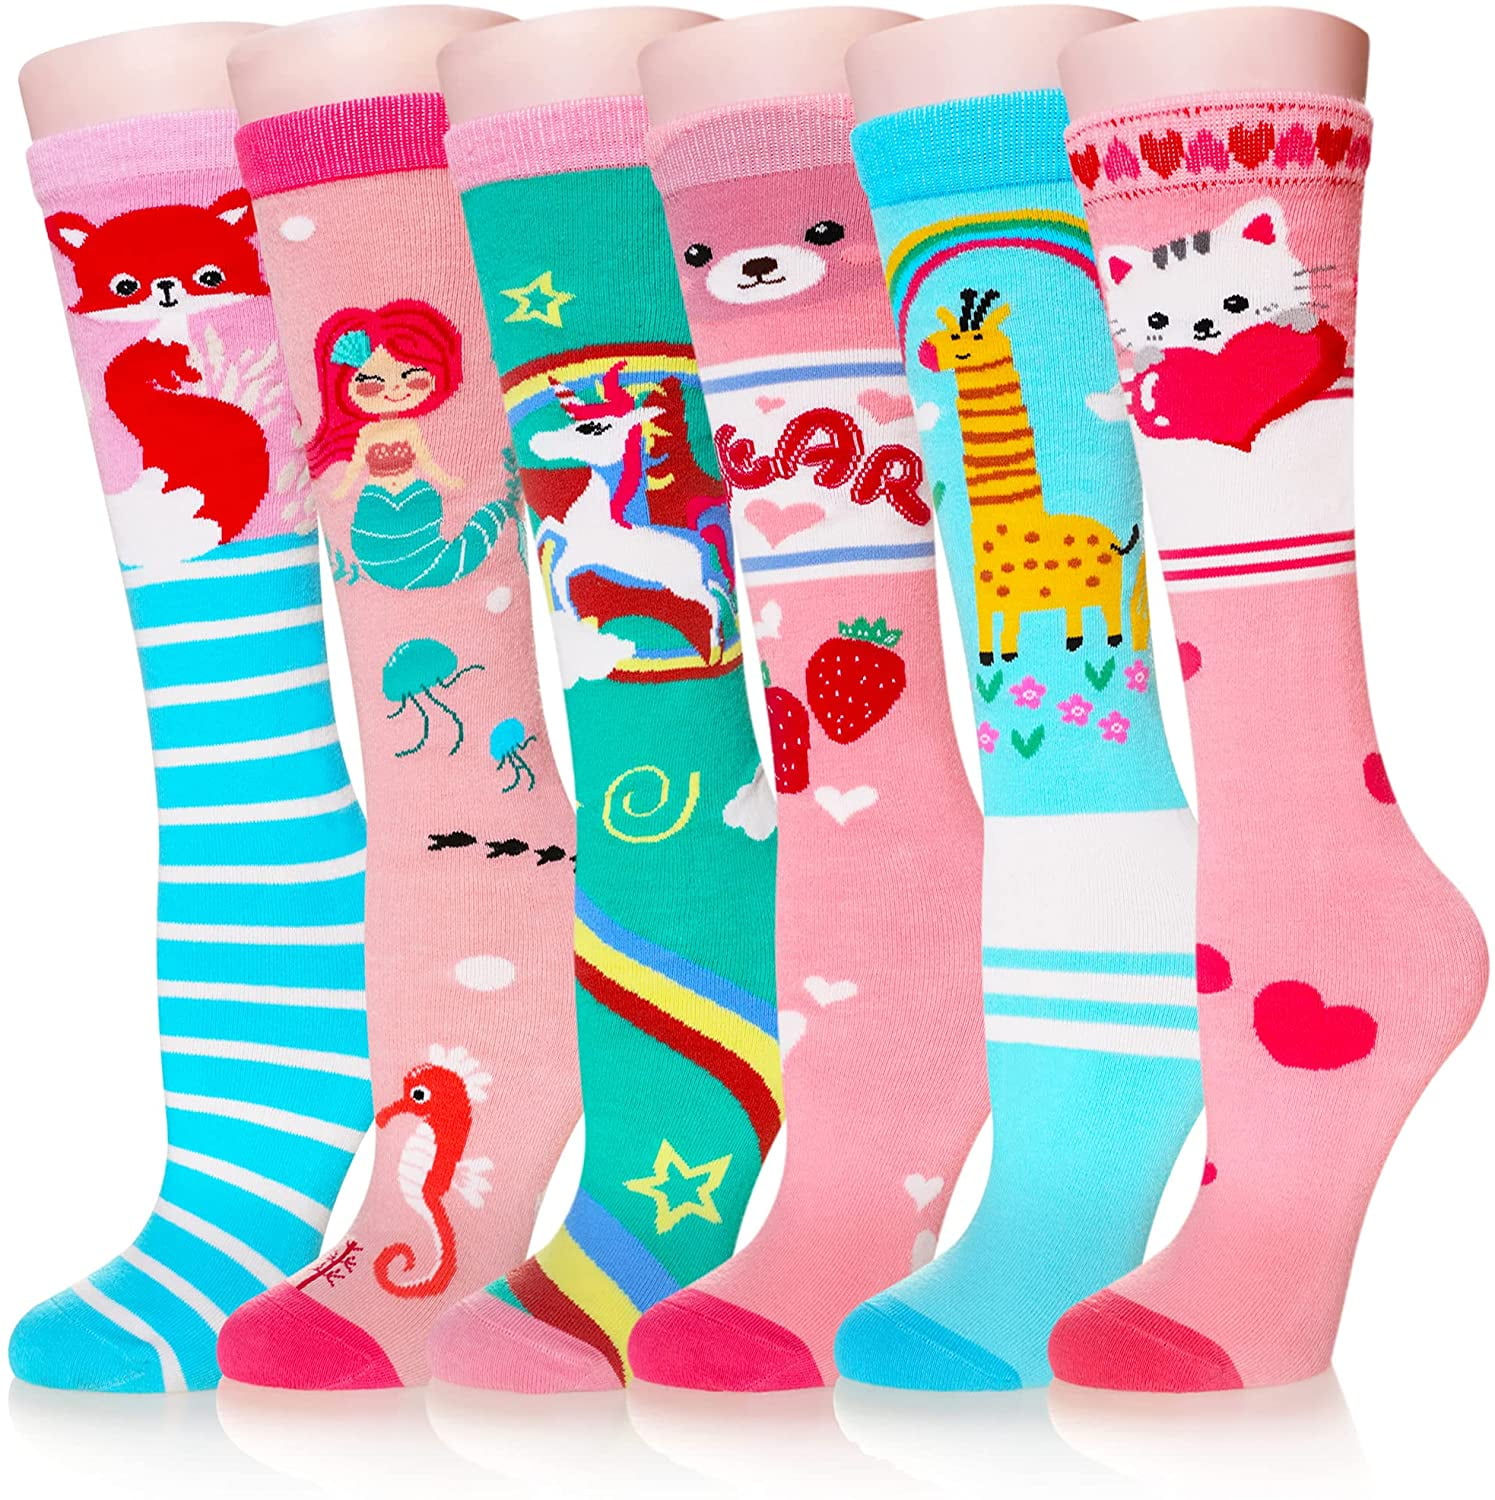 Girls Knee High Socks Funny Cartoon Long Tall Boot Cotton Kids Warm Stockings Novelty Childs Cute Animal Socks 